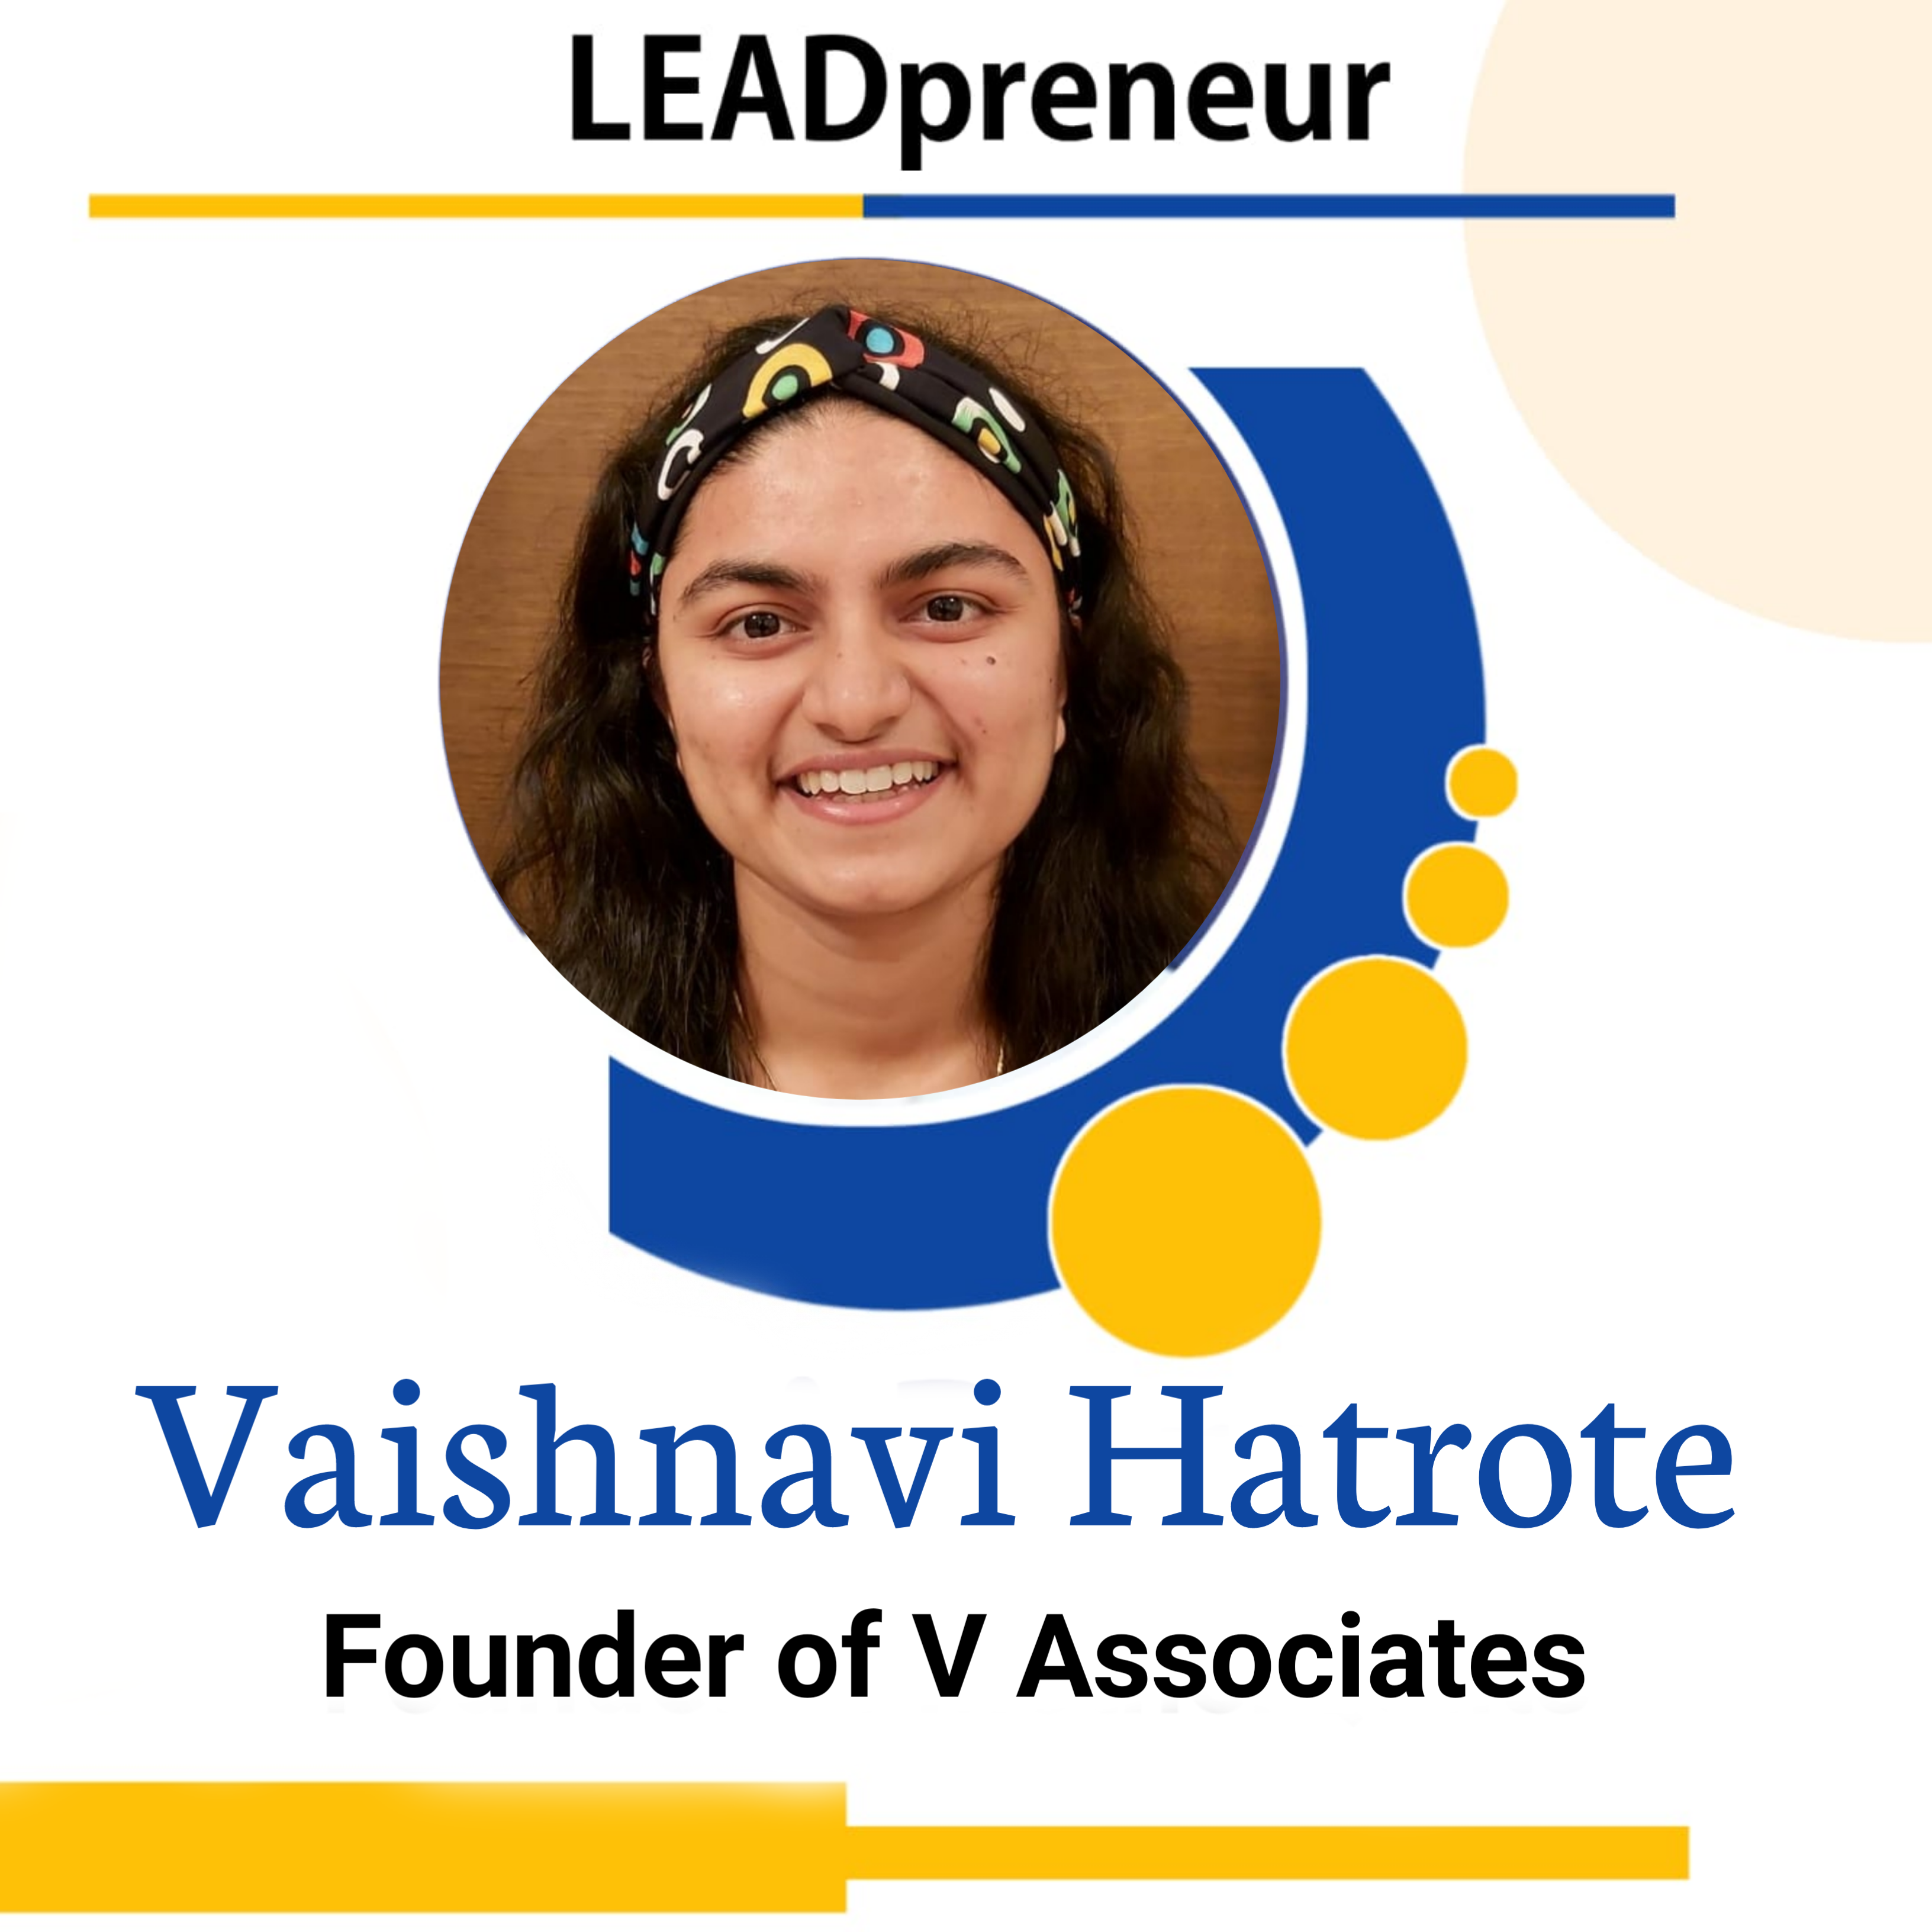 LEADpreneur Vaishnavi Hatrote